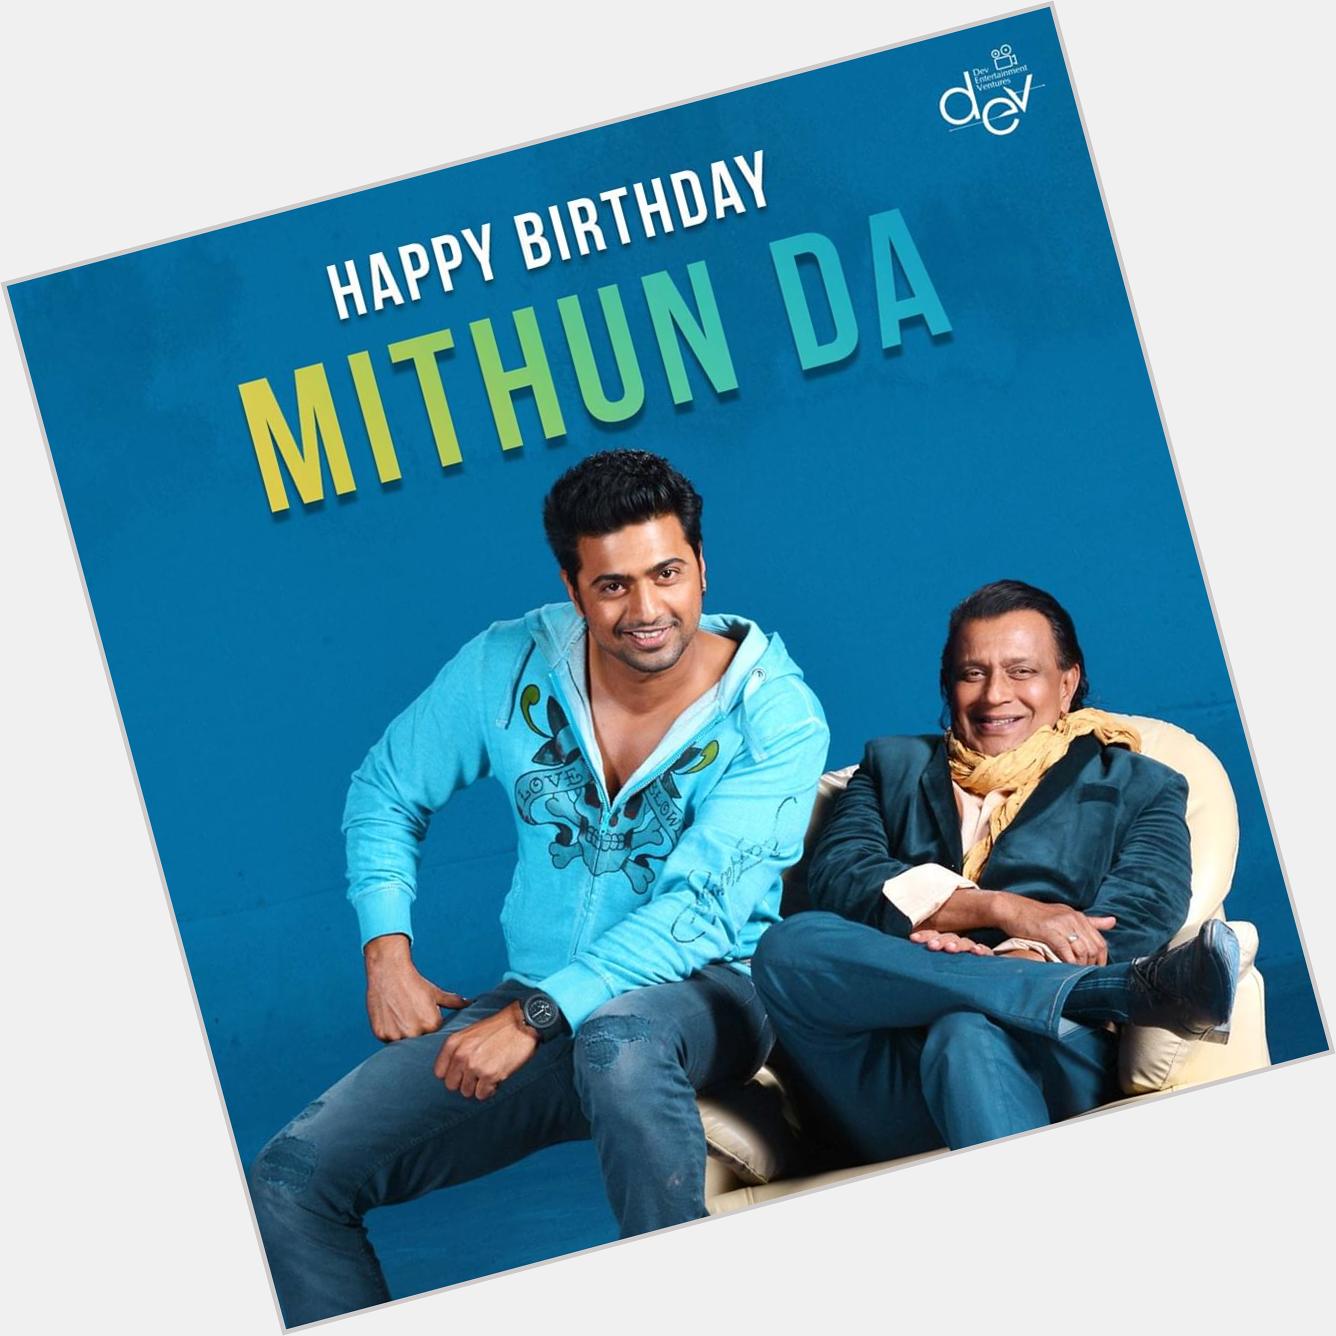 Wishing a very happy birthday to  the legendary actor, Mithun Chakraborty 